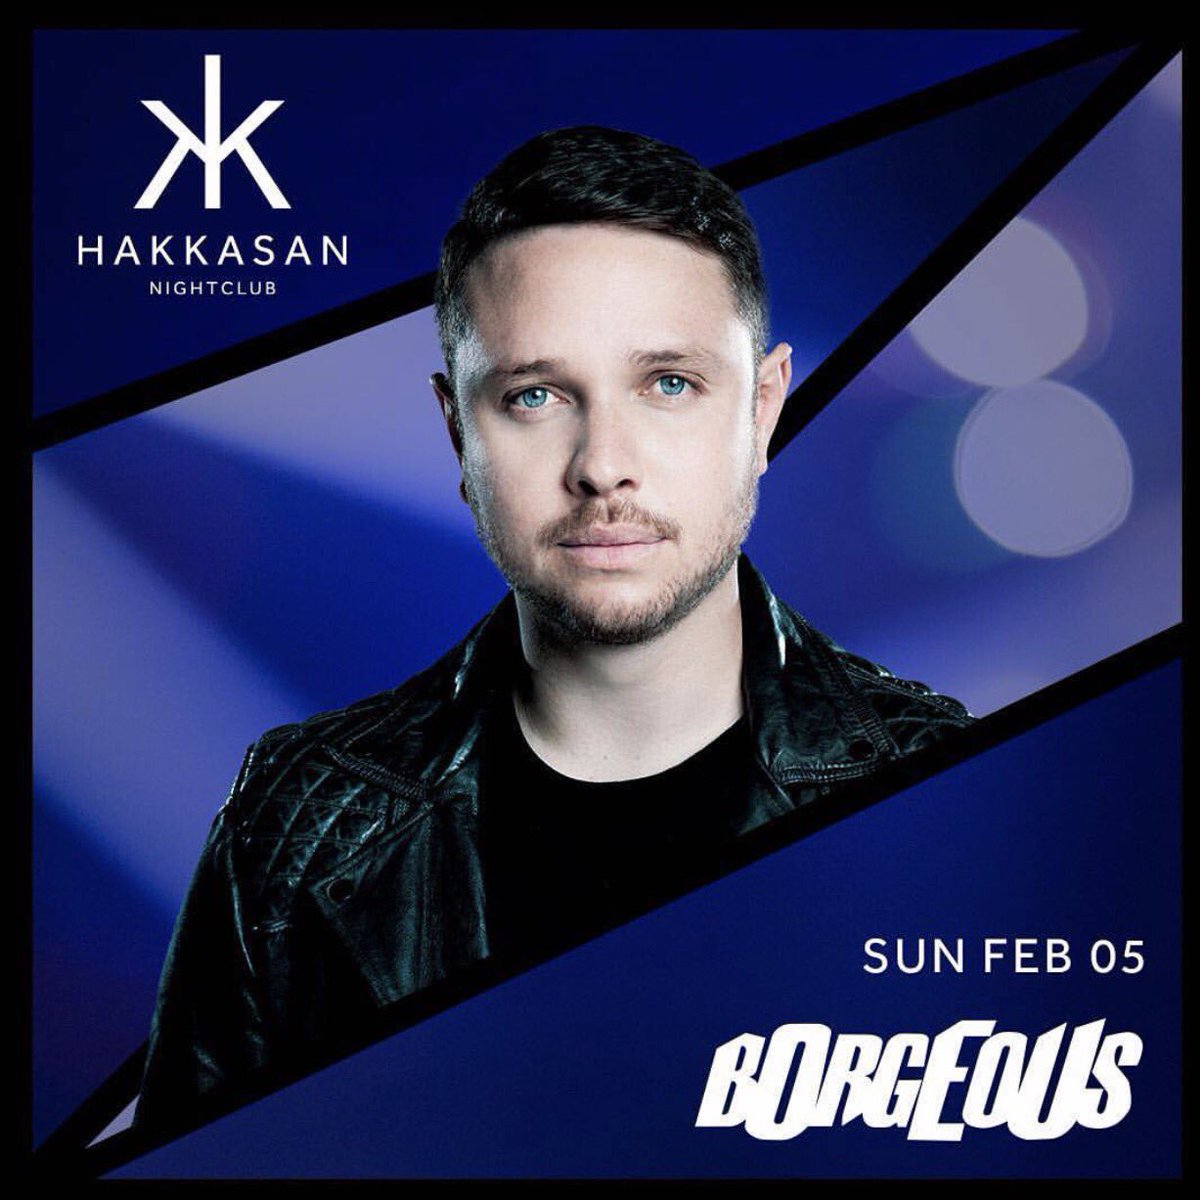 Vegas!! See you all tonight at @HakkasanLV 🙌🏼🎉 https://t.co/Rapf5UtuBP